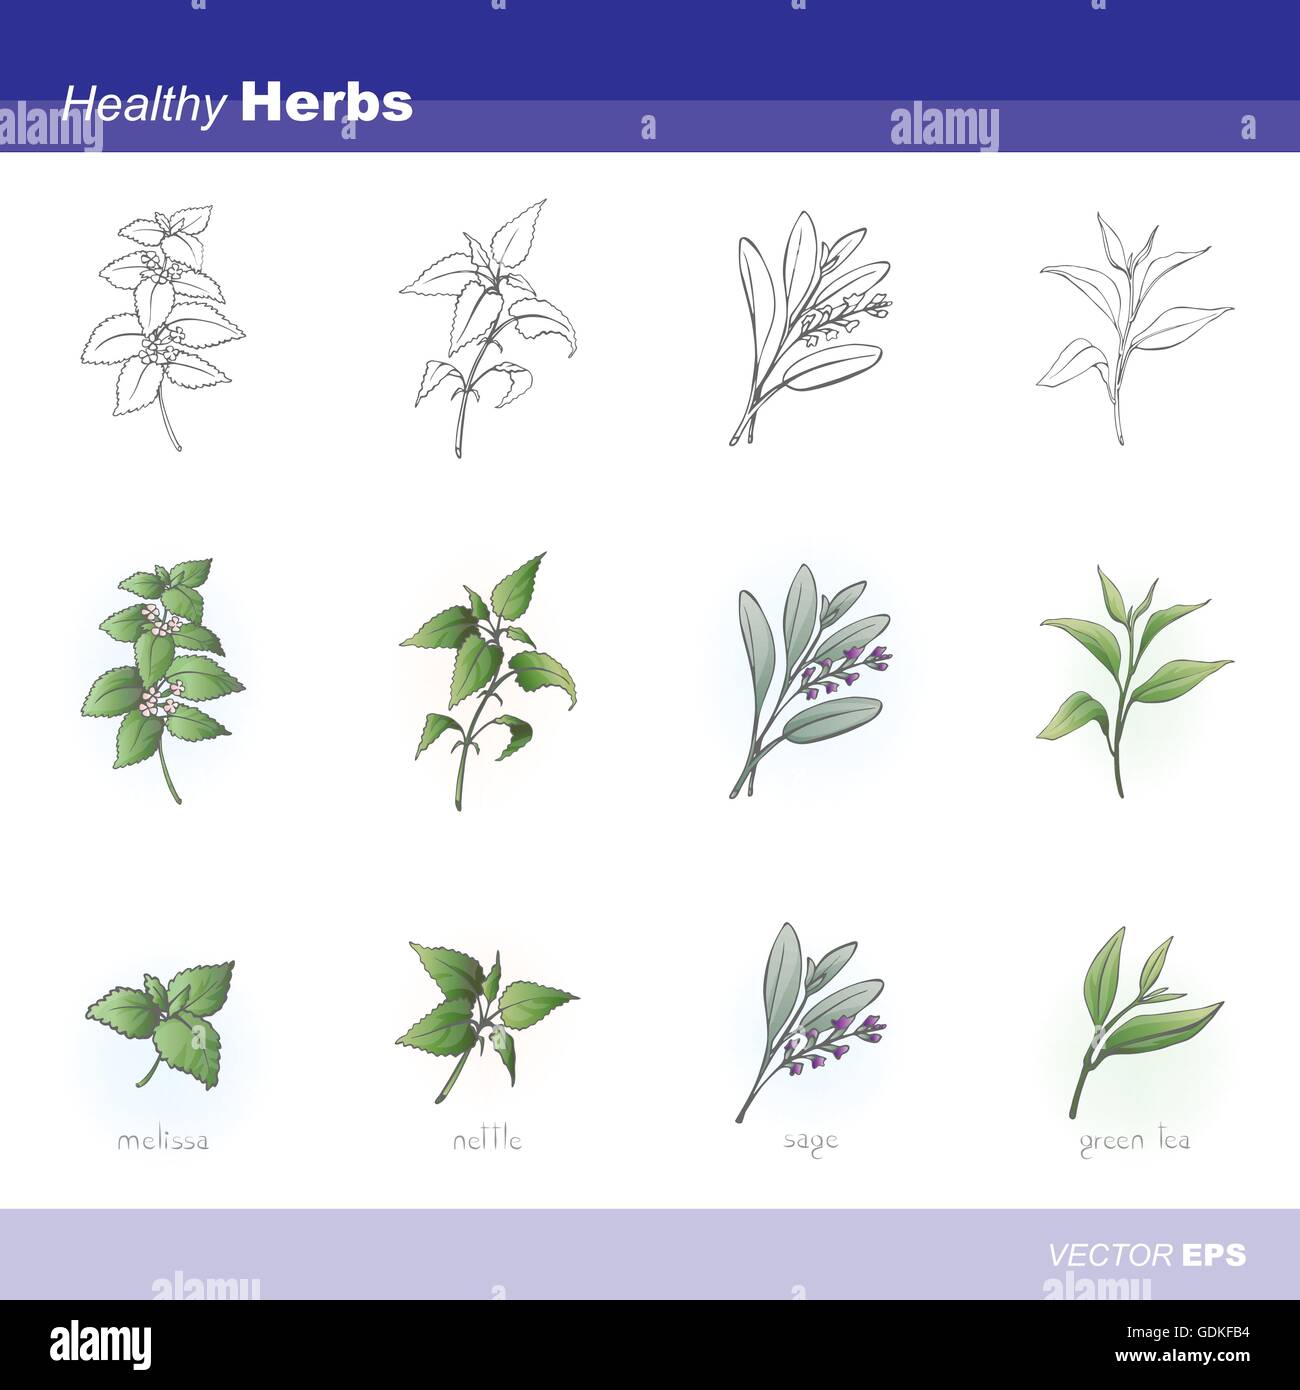 Healthy herbs set: melissa, sage, nettle and green tea Stock Vector